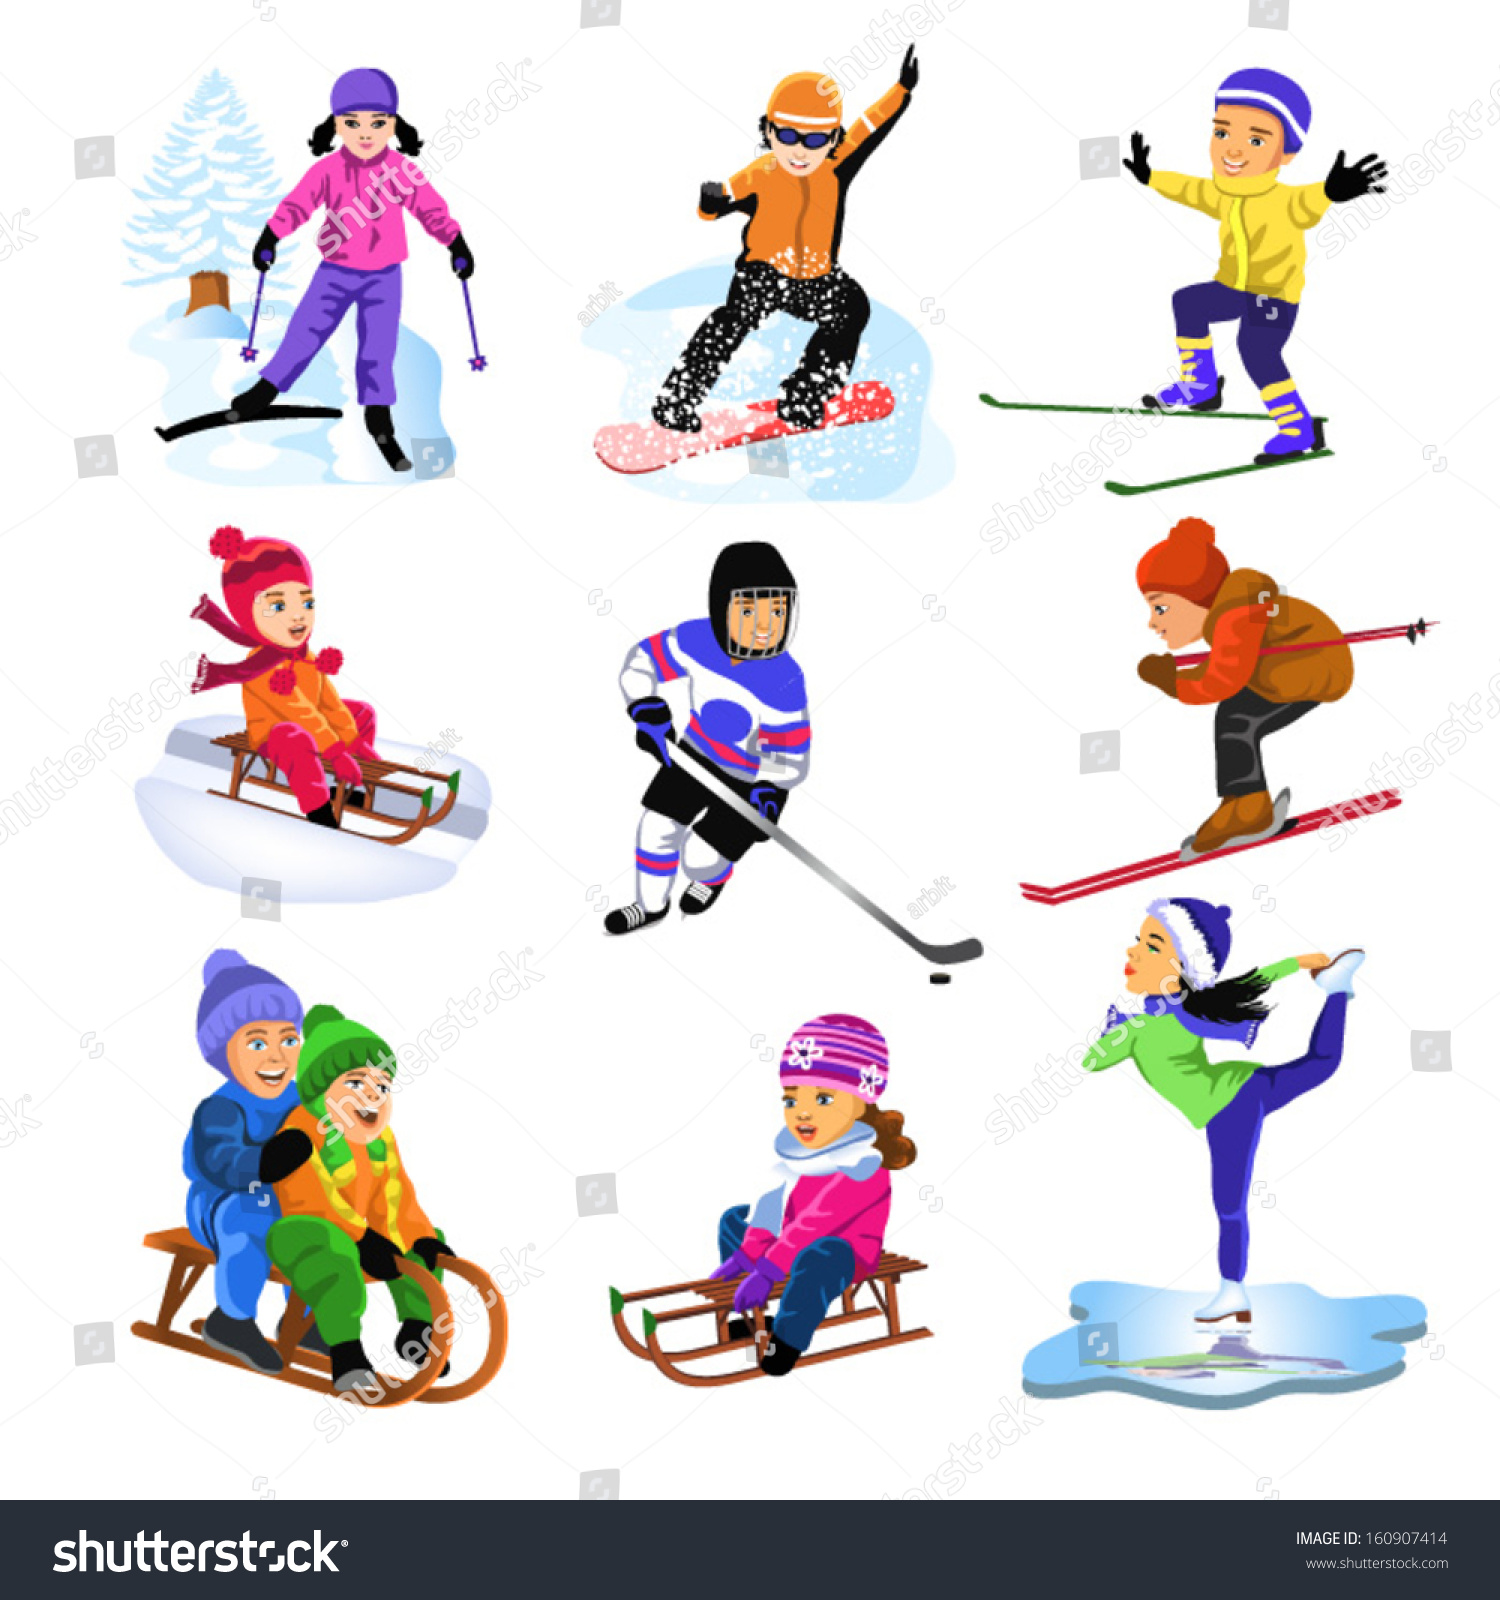 Winter Sports Stock Vector (Royalty Free) 160907414 - Shutterstock